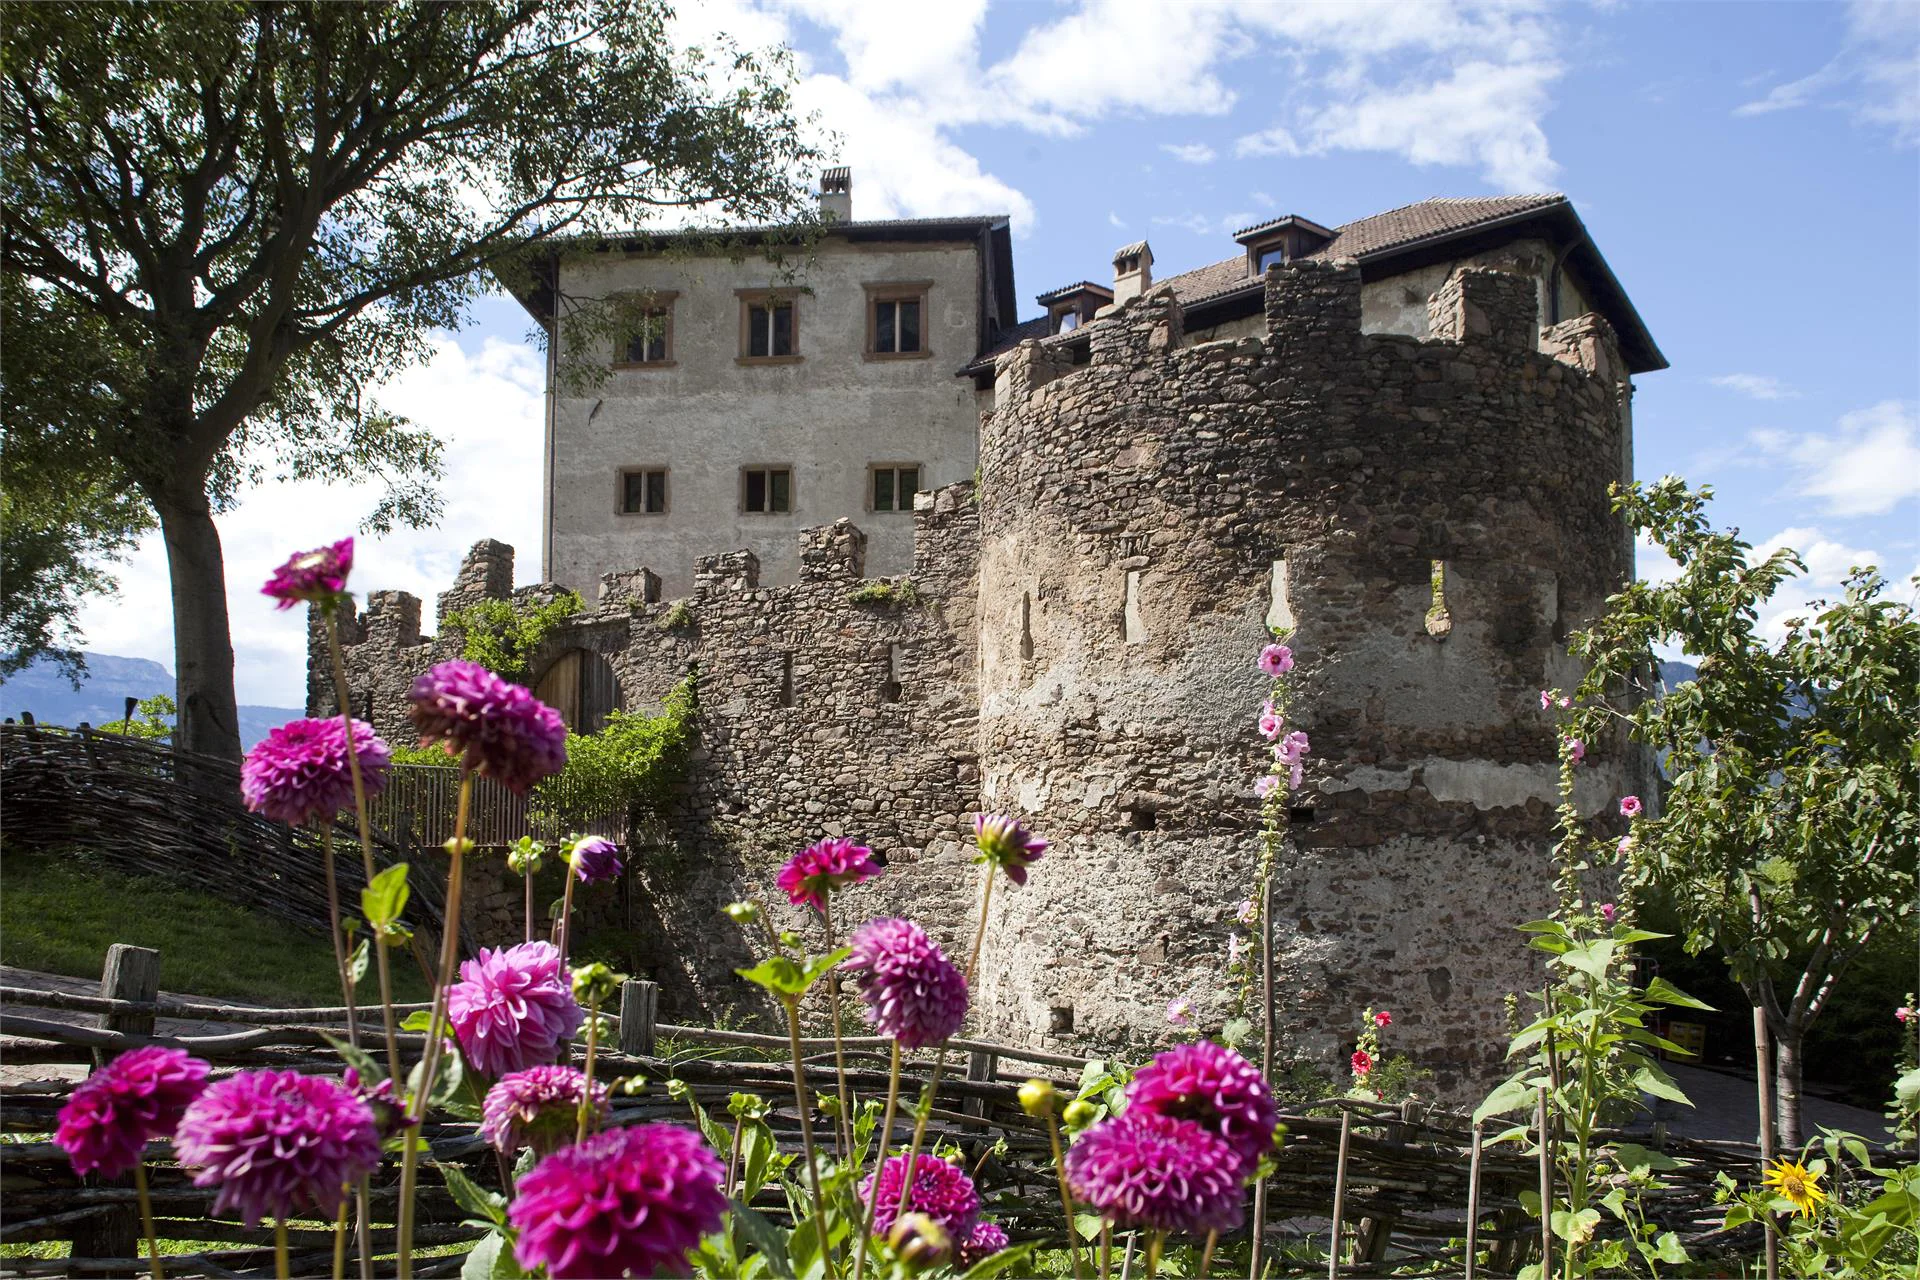 Flavon/Haselburg Castle Bolzano/Bozen 2 suedtirol.info